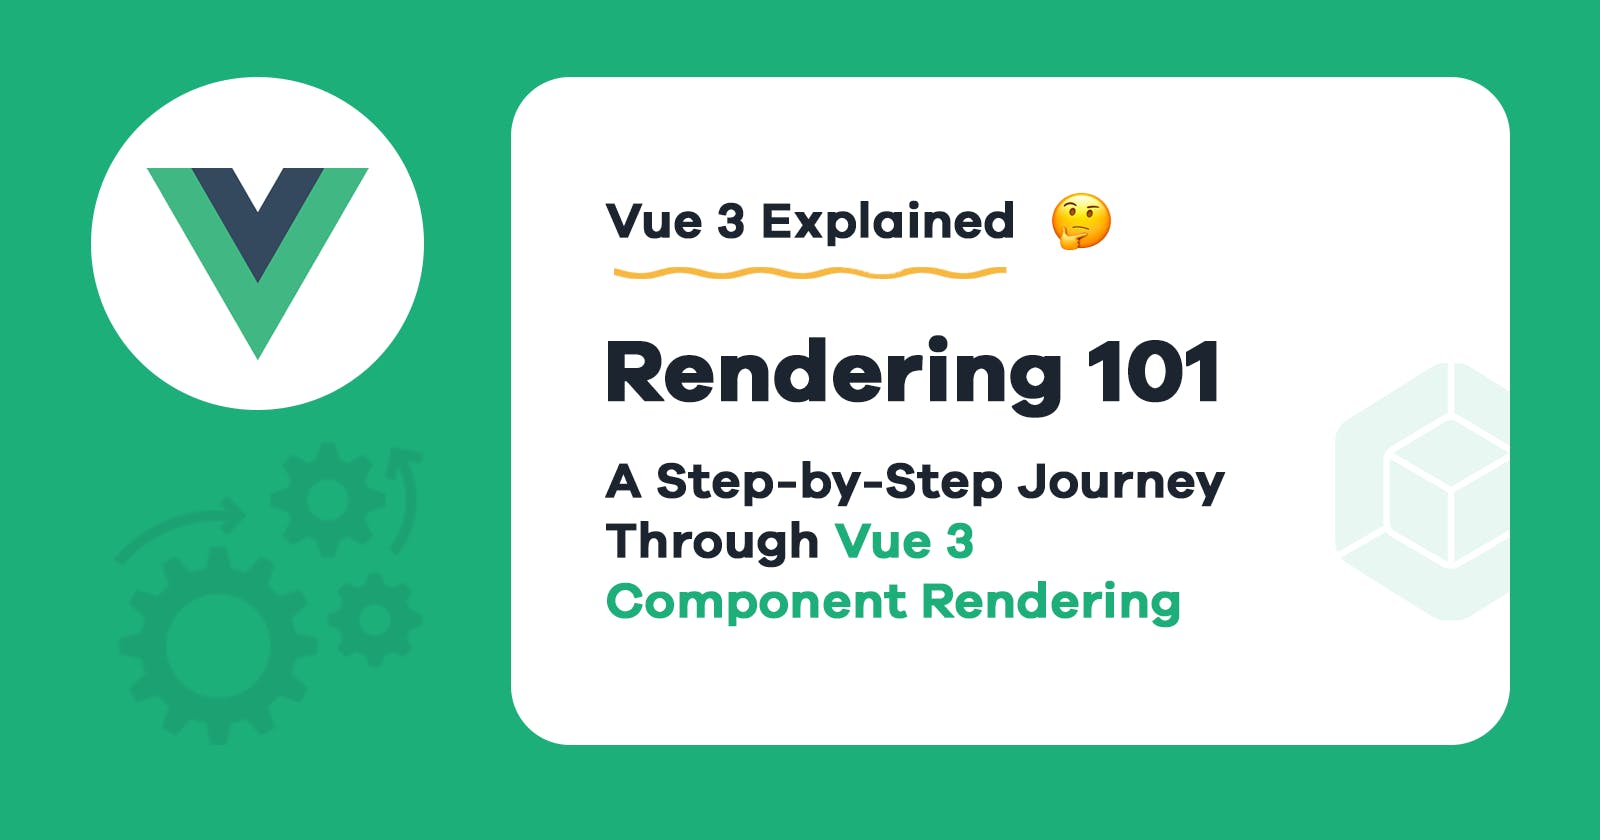 Vue 3 Explained - Part 4: Rendering 101